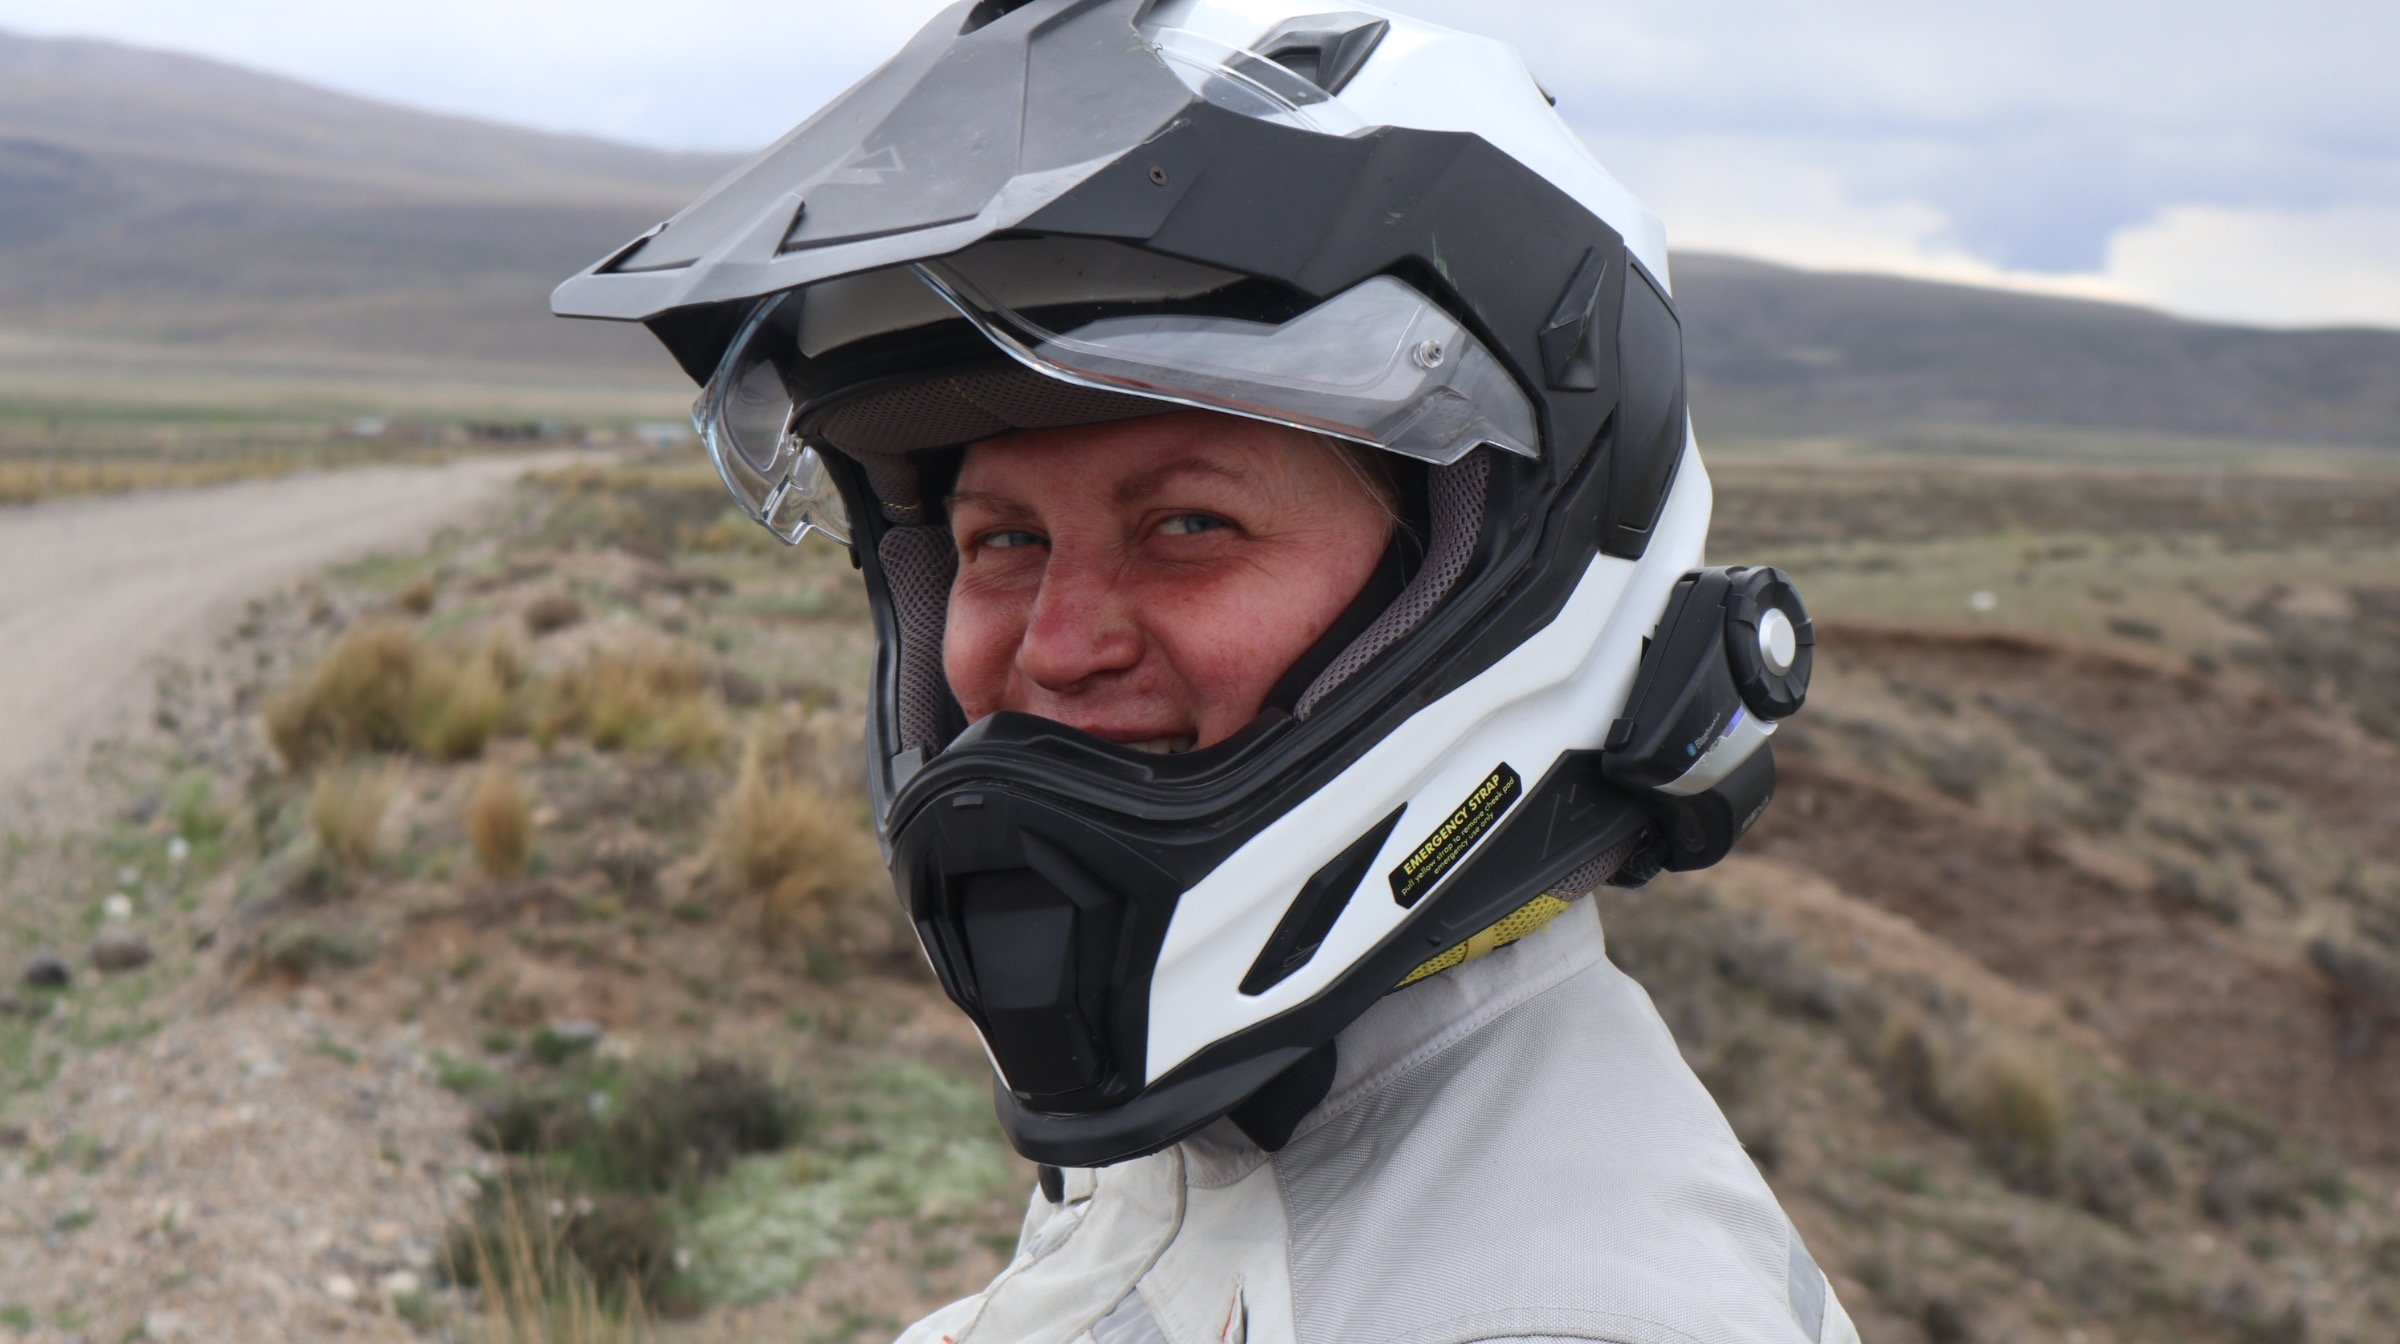 Sharon-Doug-Wildeboer-Adventure-Rider-Radio-Motorcycle-Podcast-8.jpeg